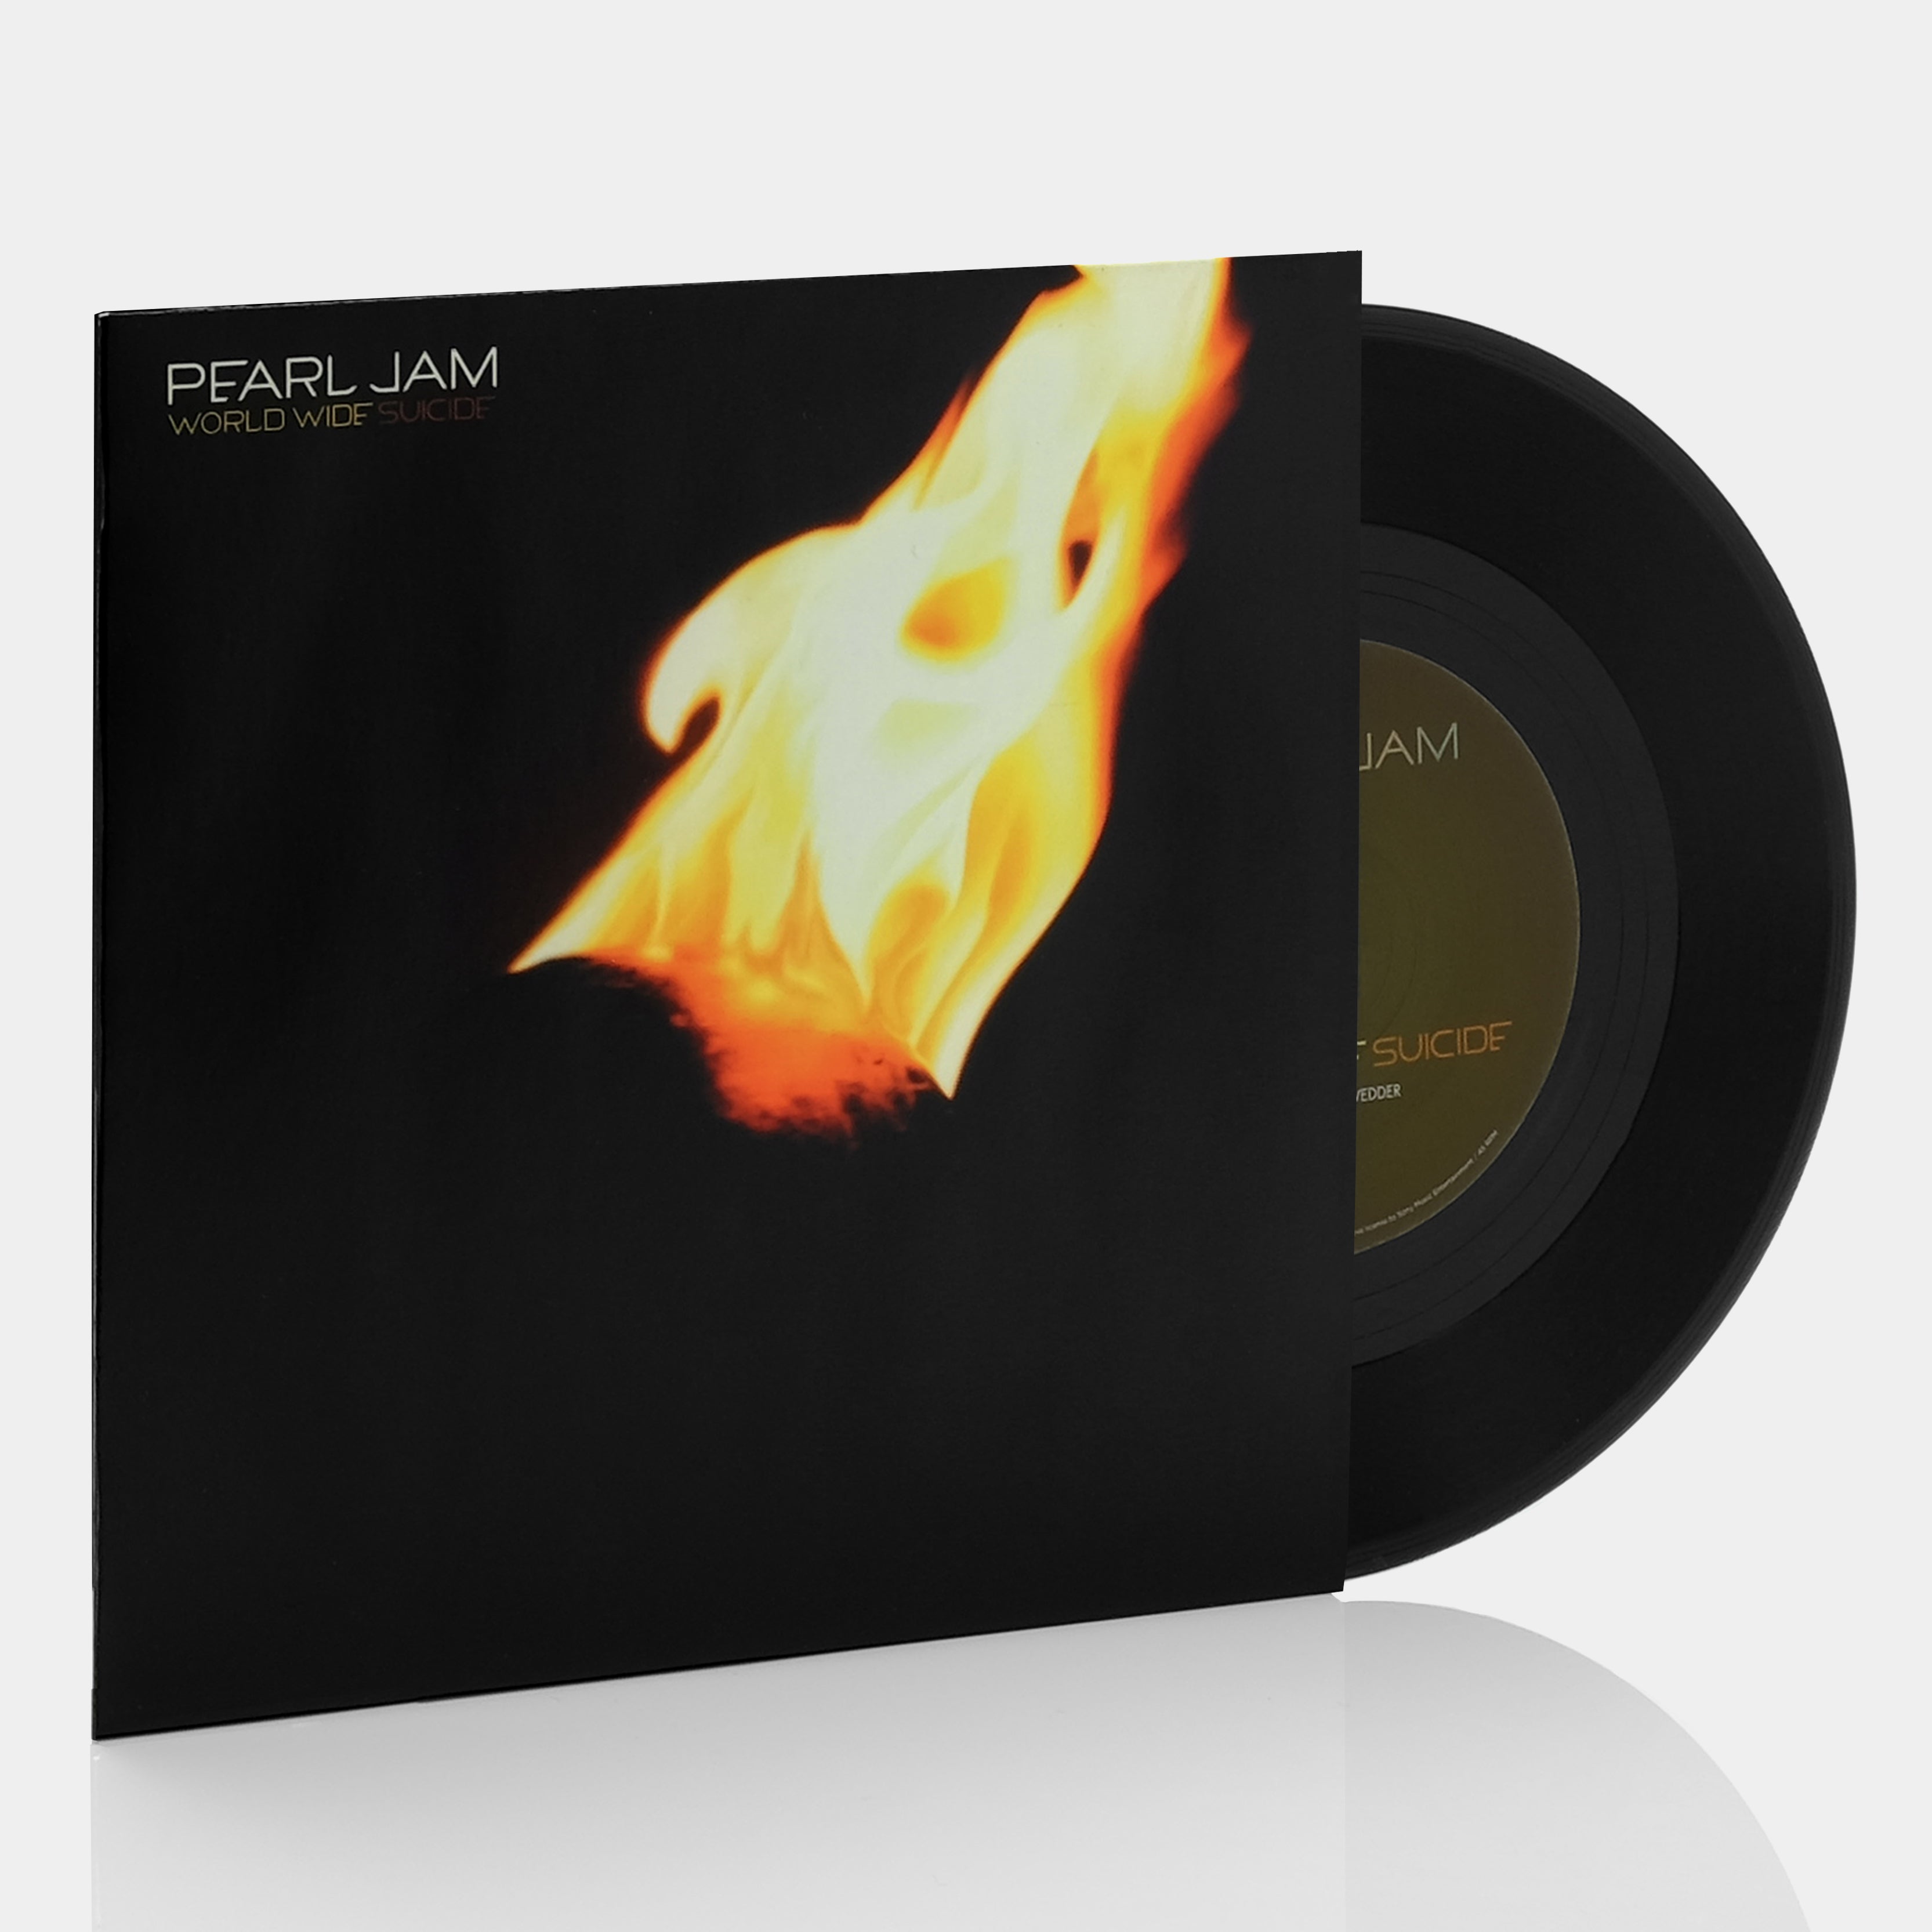 Pearl Jam - World Wide Suicide 7" Single Vinyl Record